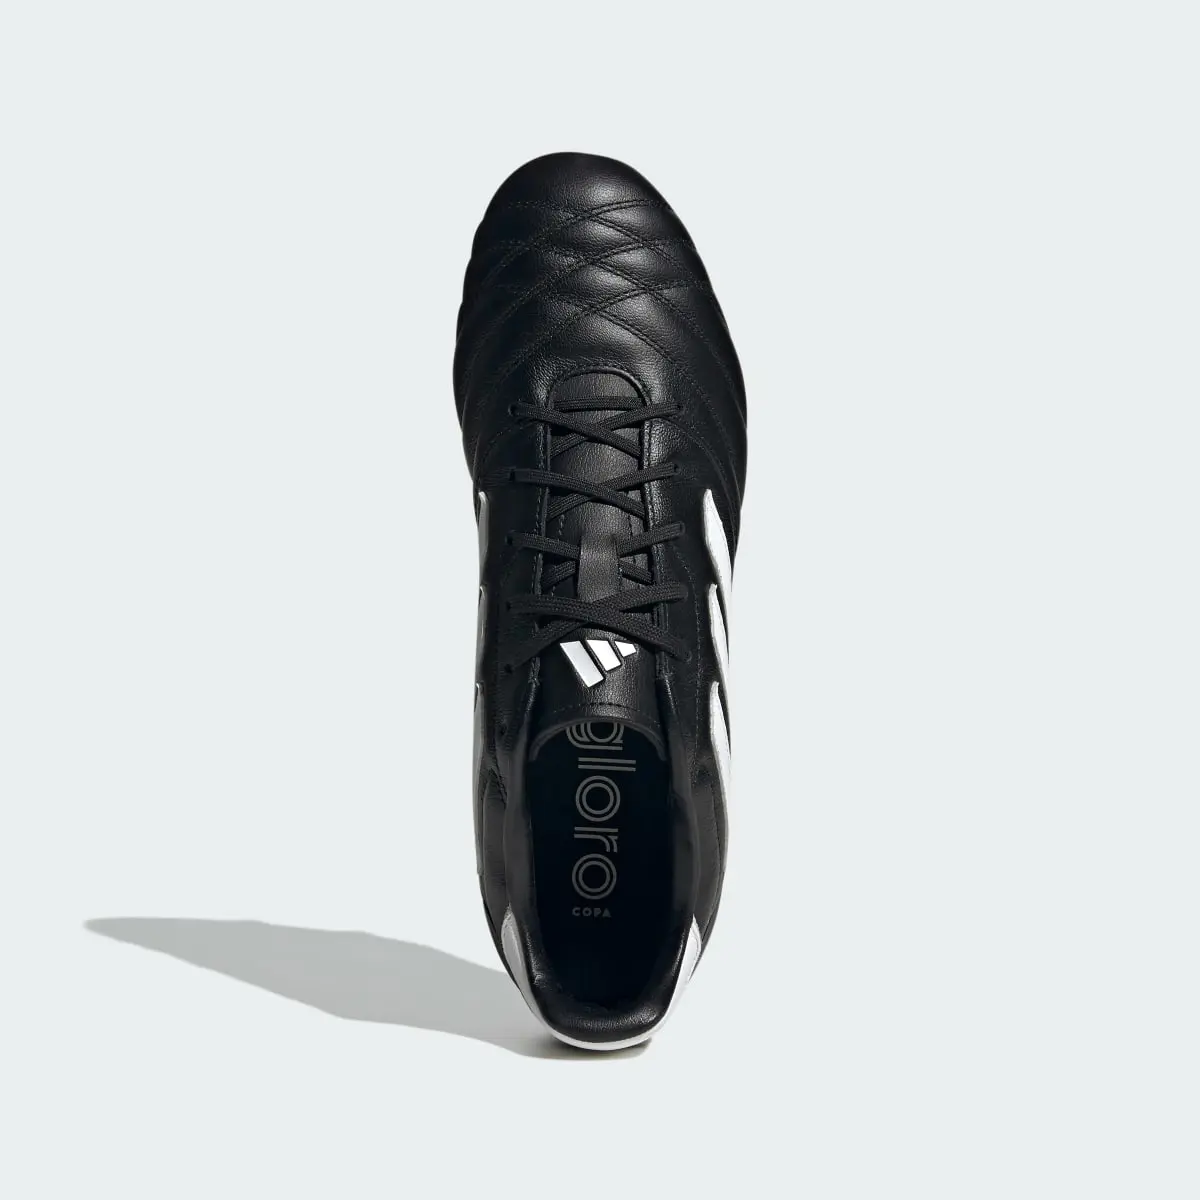 Adidas Chaussure Copa Gloro Terrain souple. 3